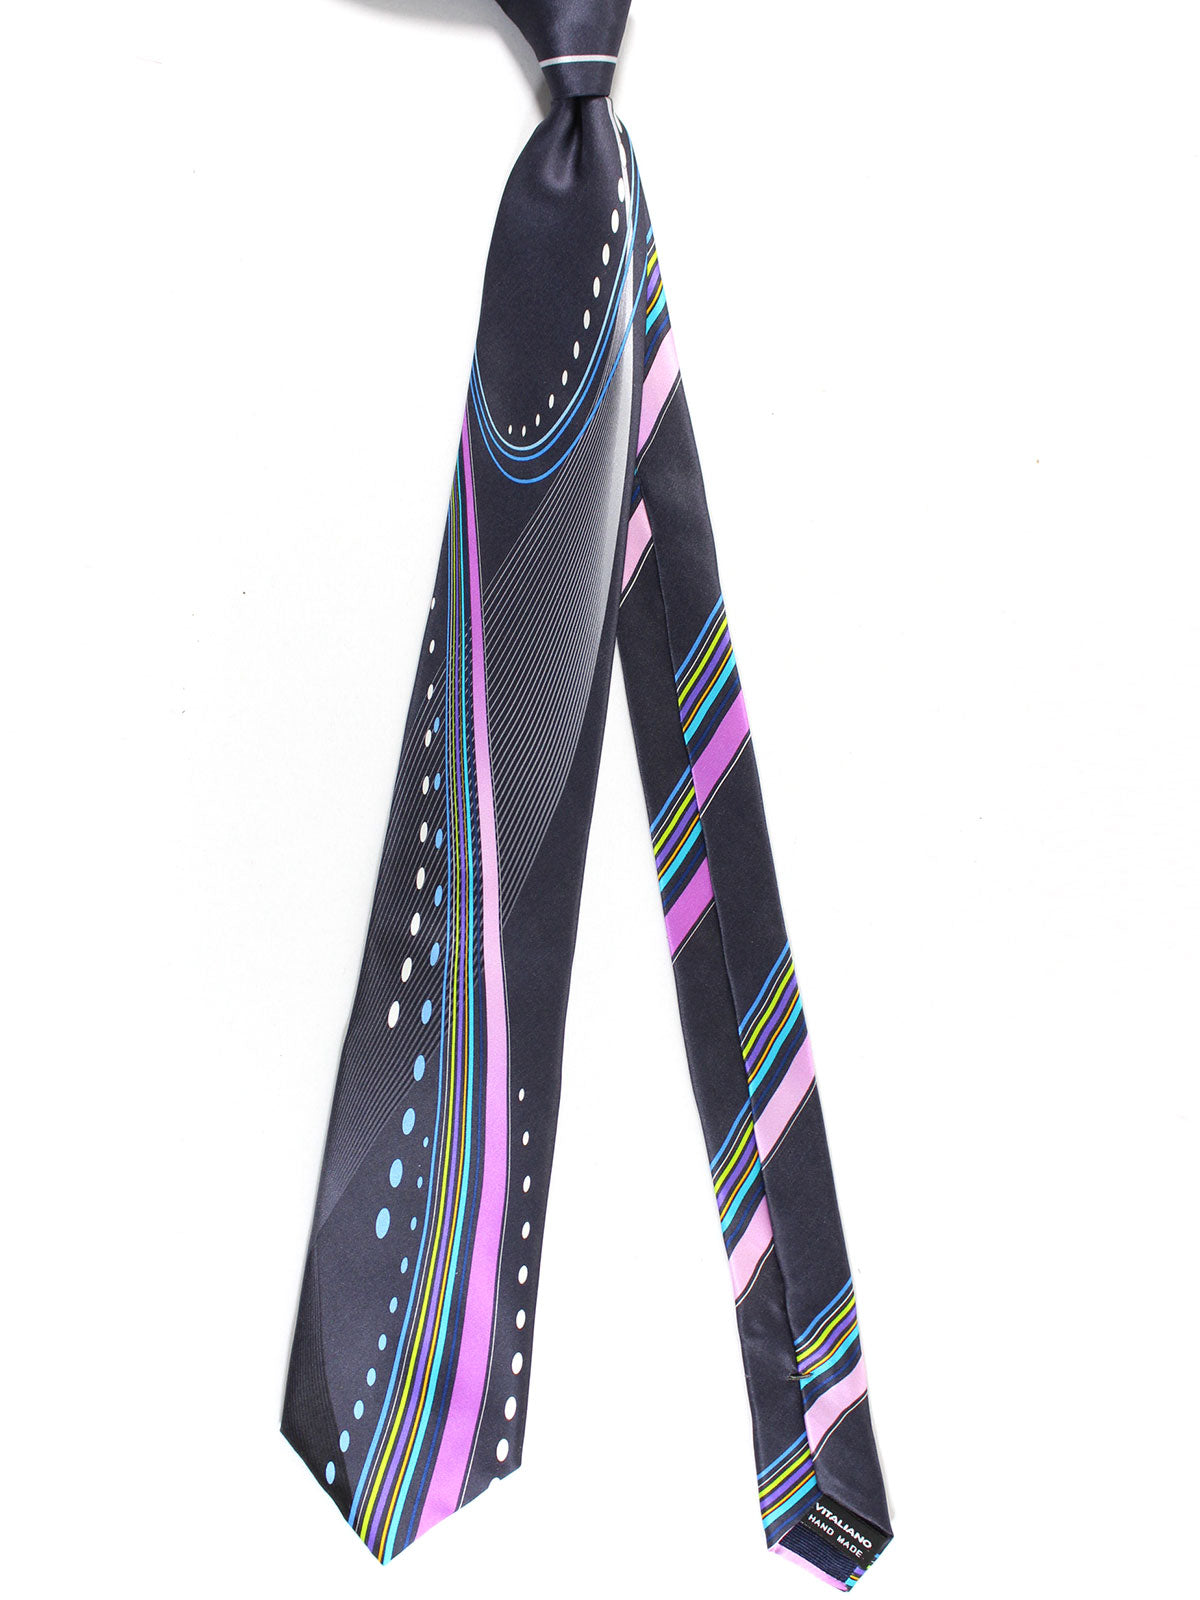 Vitaliano Pancaldi Tie Black Lilac Aqua Swirl Design